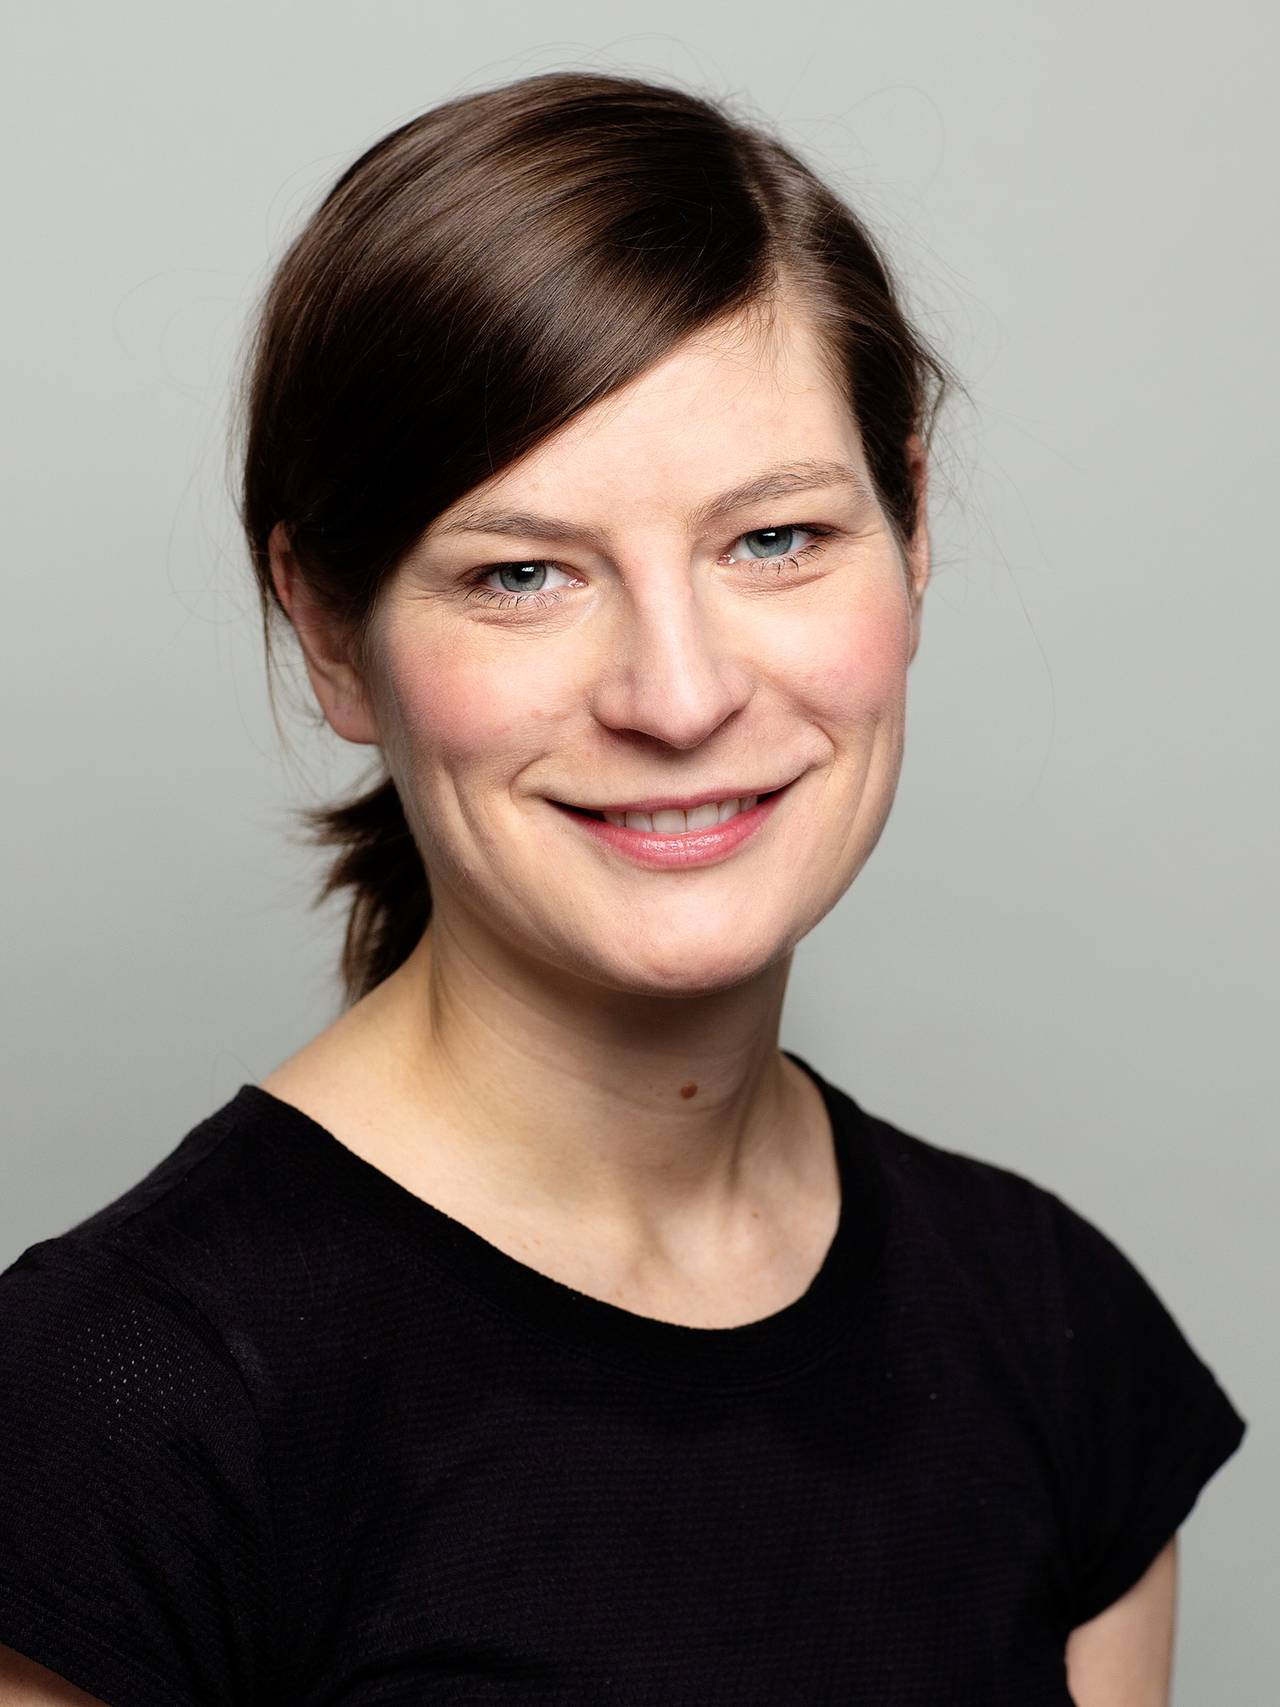 
Elena Pummer, Førsteamanuensis, Institutt for bygg- og miljøteknikk NTNU